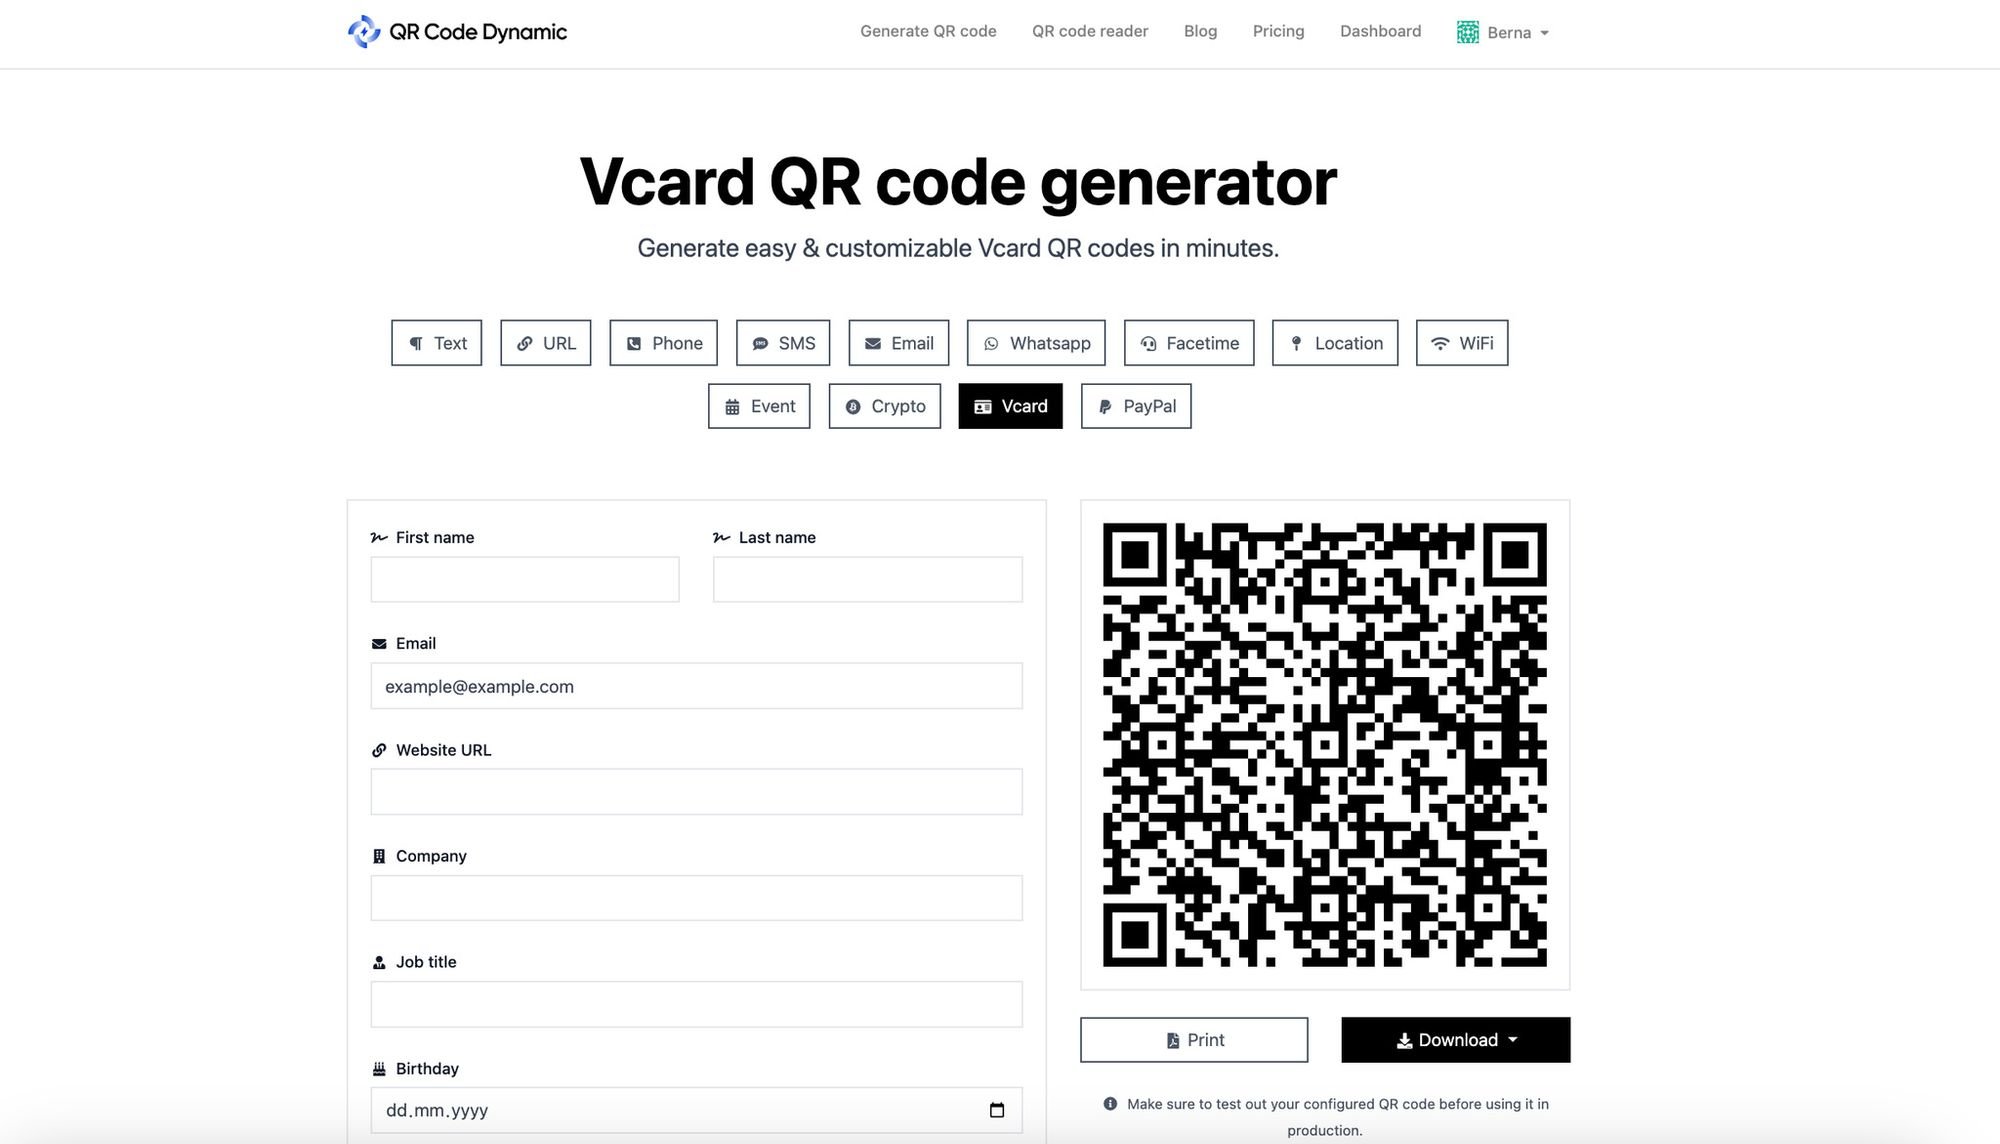 a screenshot of Vcard QR code generator of QRCodeDynamic